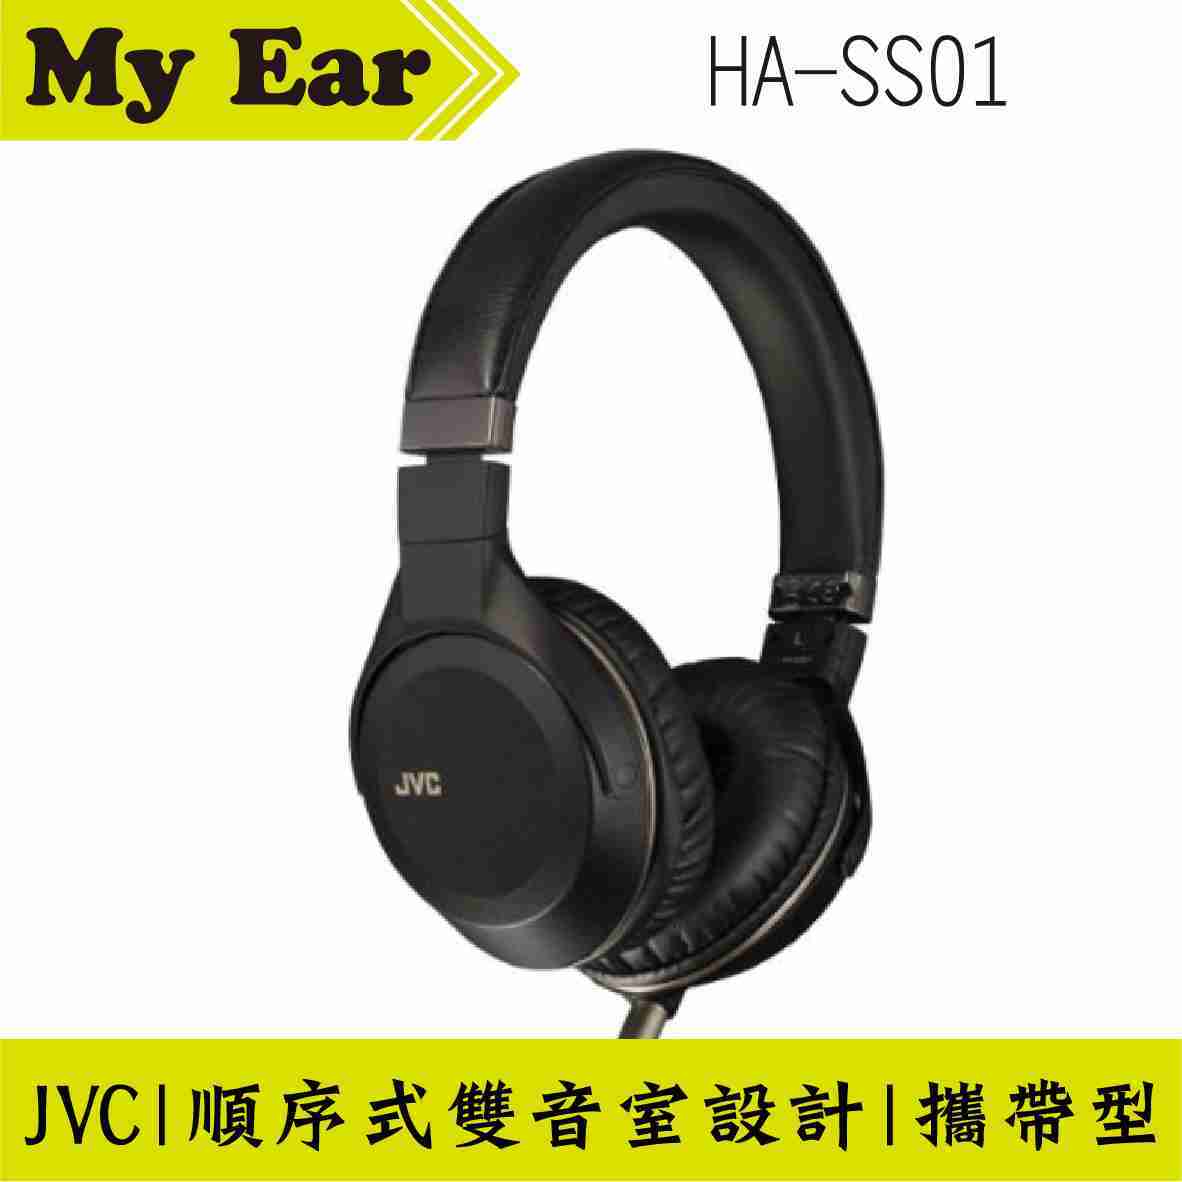 JVC HA-SS01 耳罩式耳機 40mm 高清驅動單體 | My Ear耳機專門店